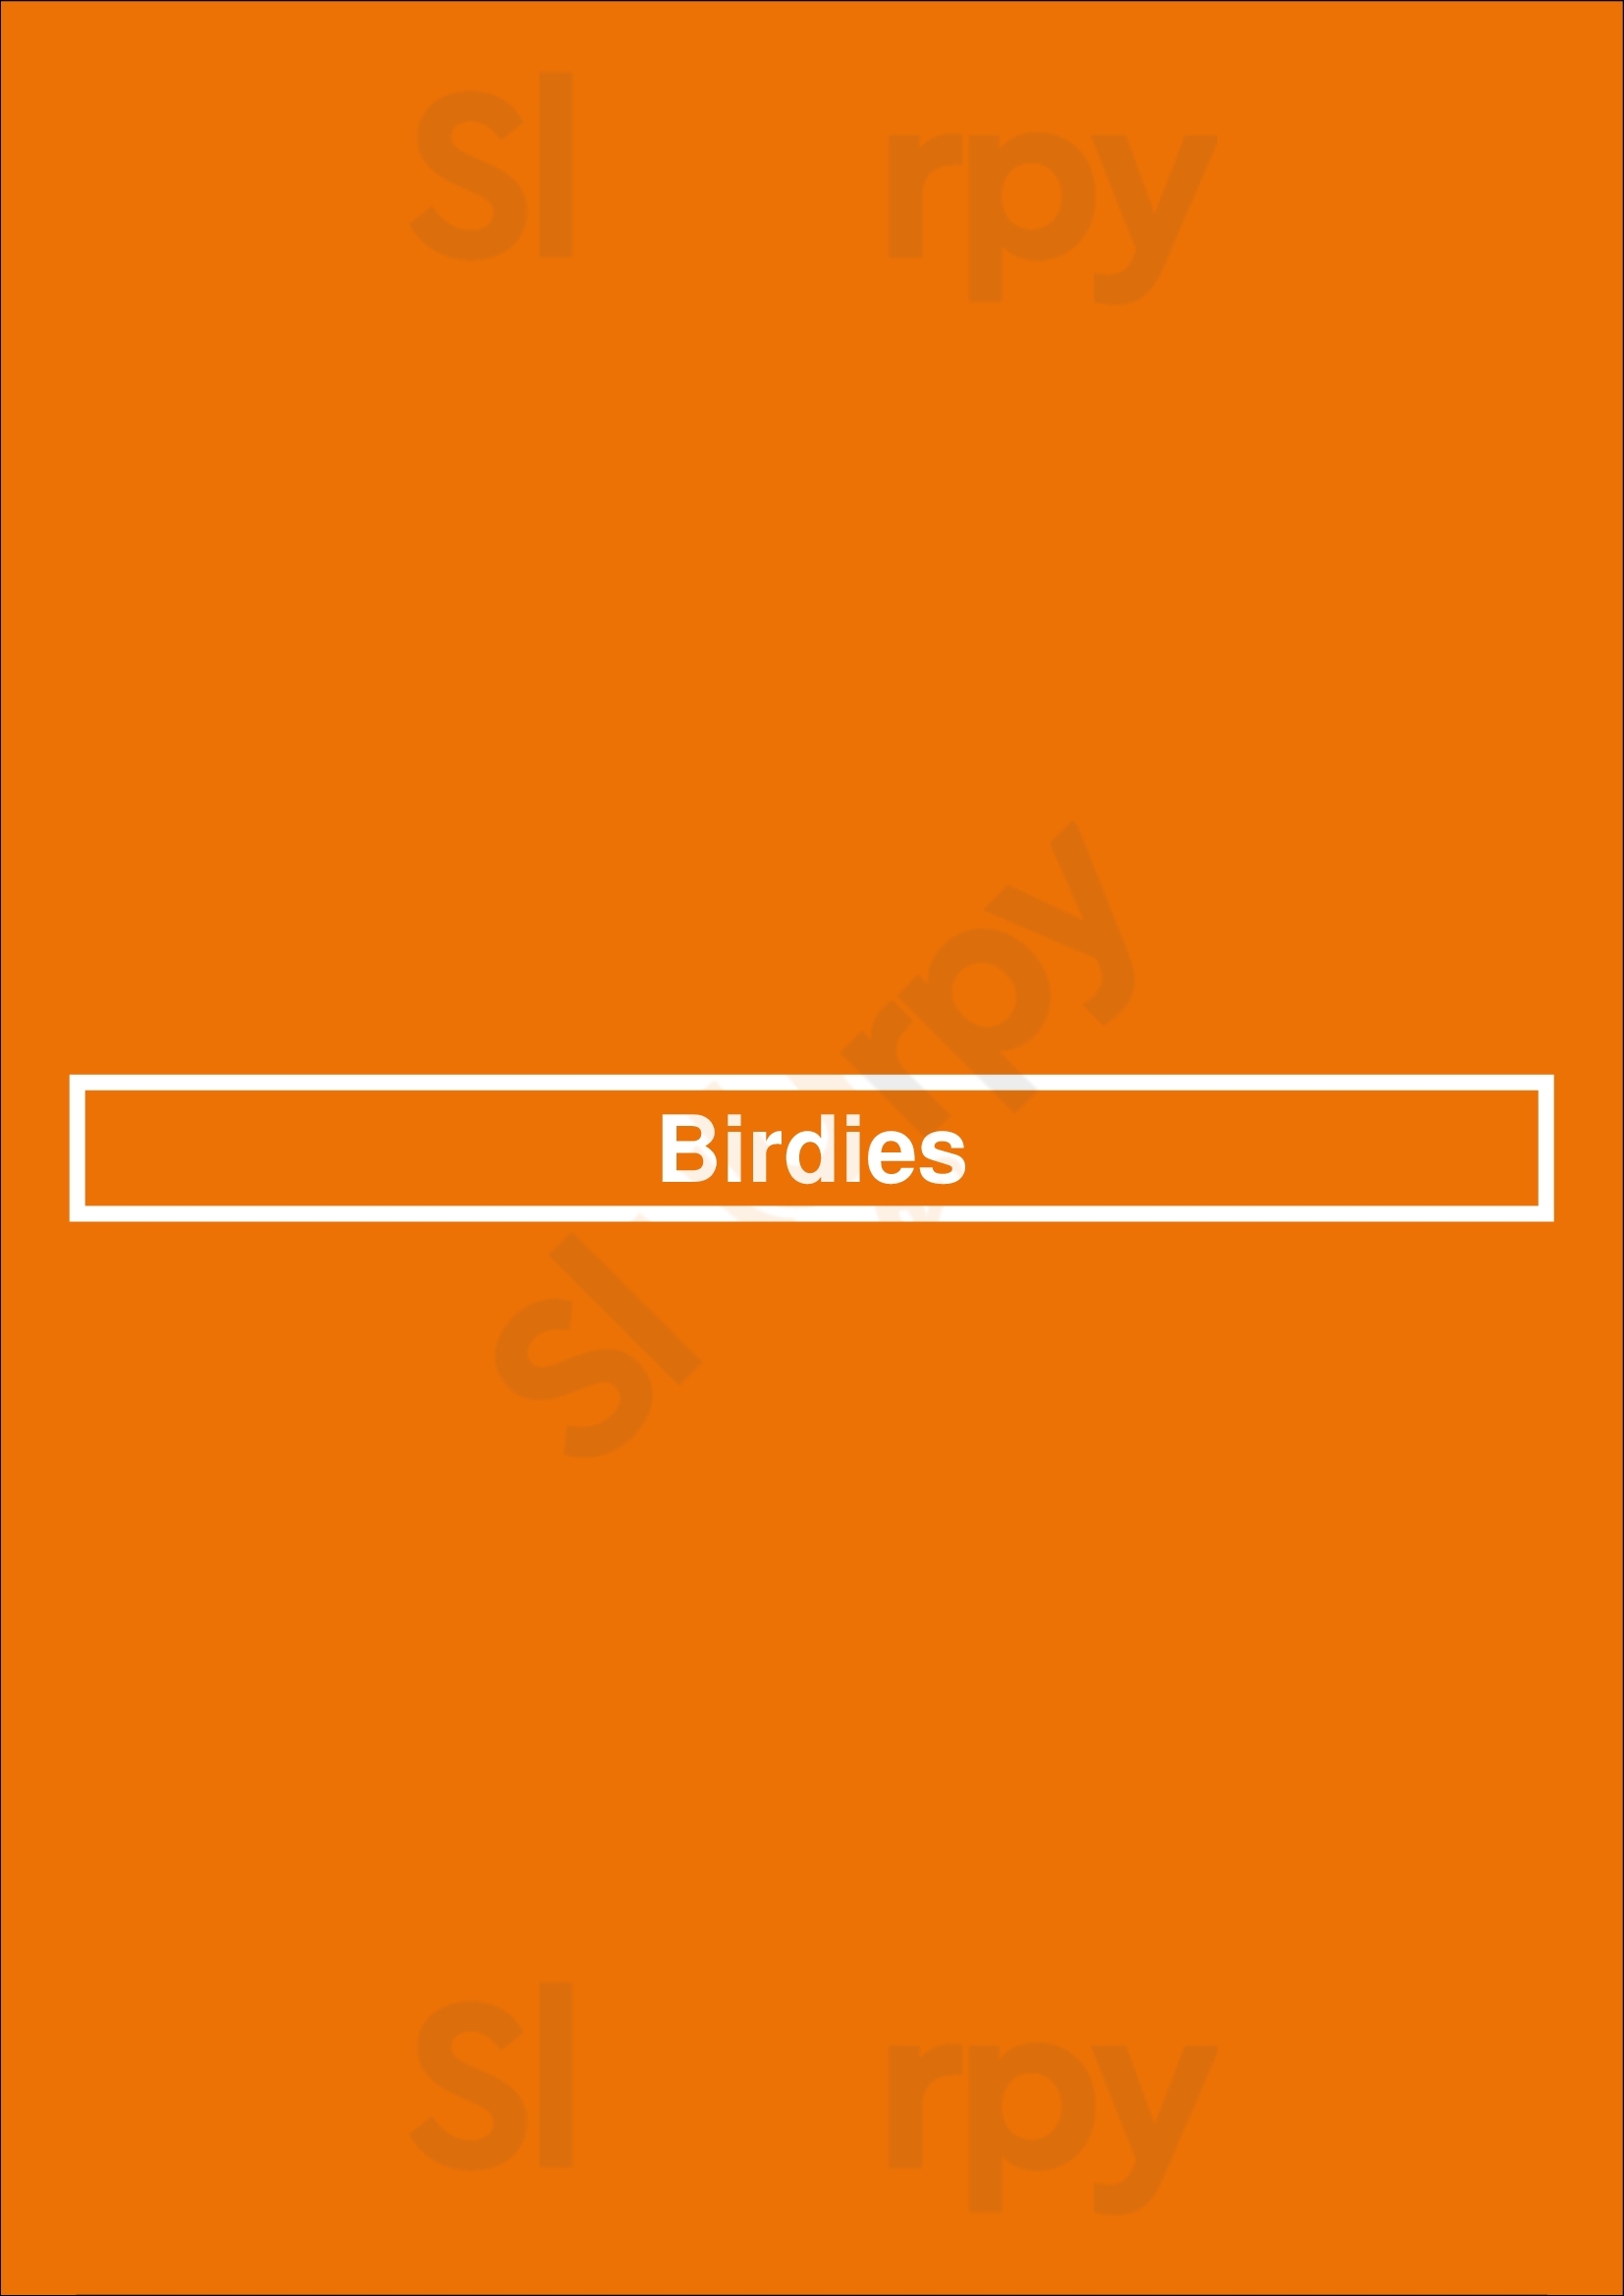 Birdies Los Angeles Menu - 1